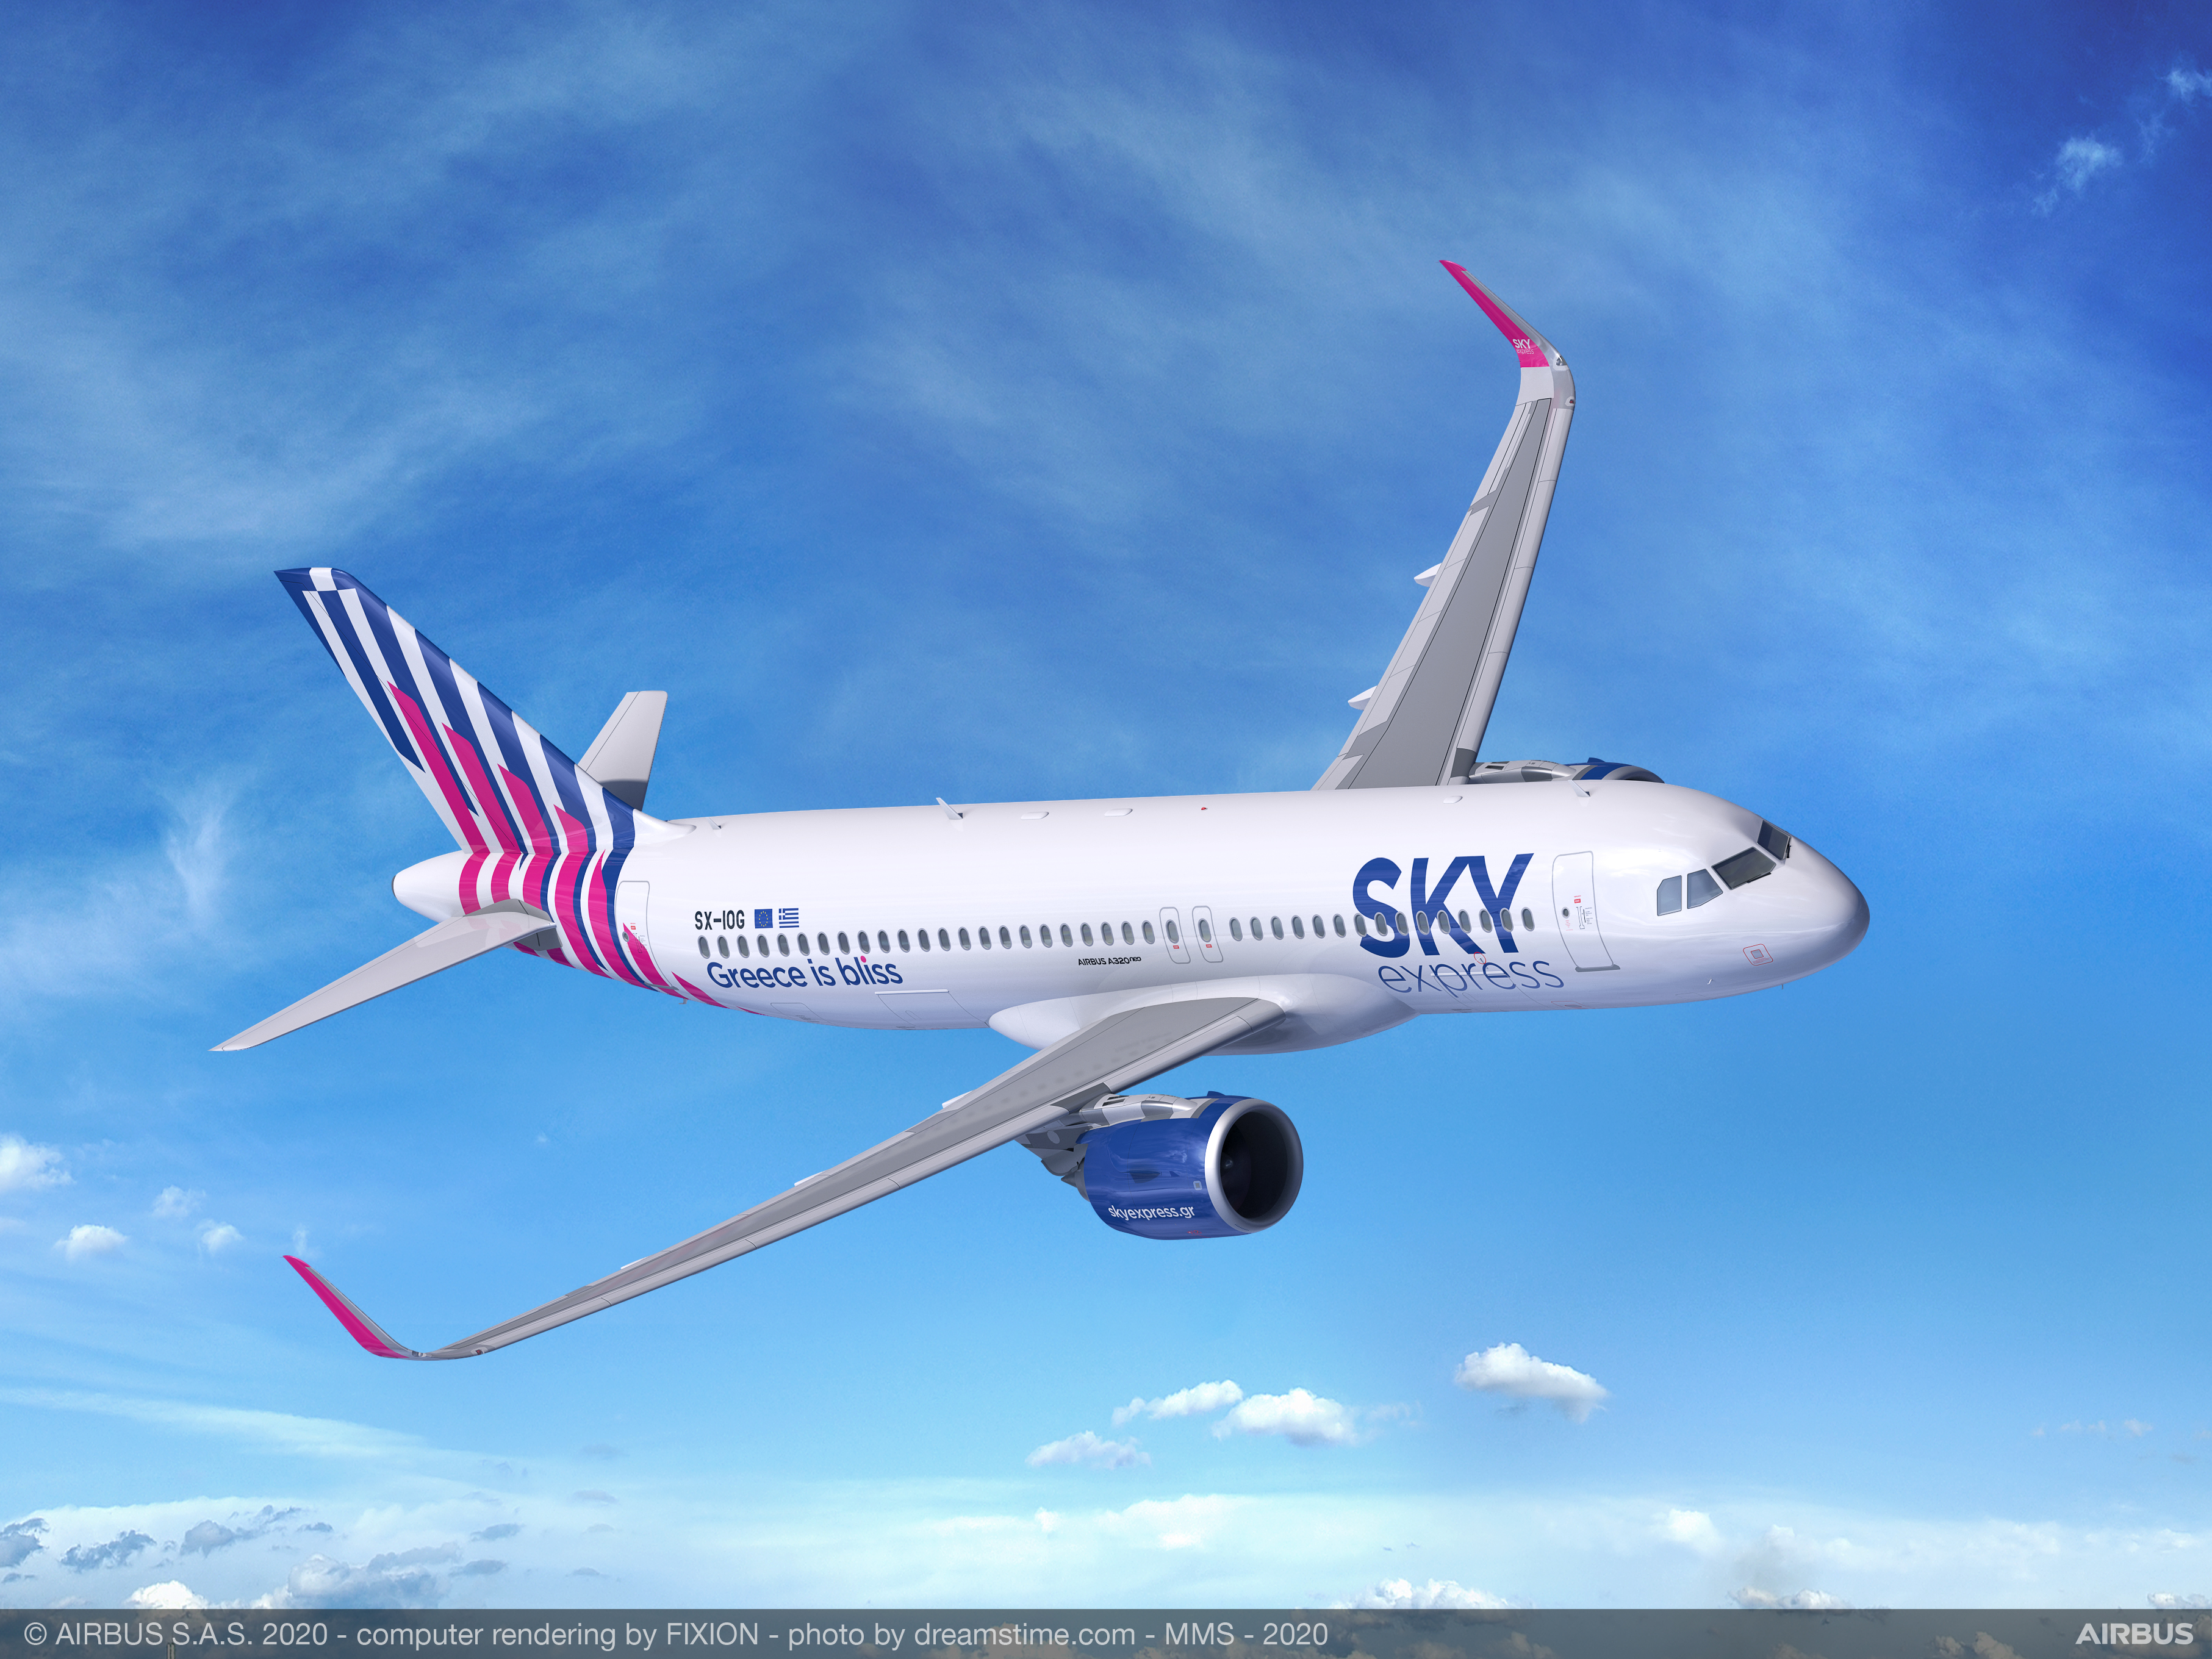 SKY express: Δώρο ένα εισιτήριο με κάθε αλλαγή πτήσης